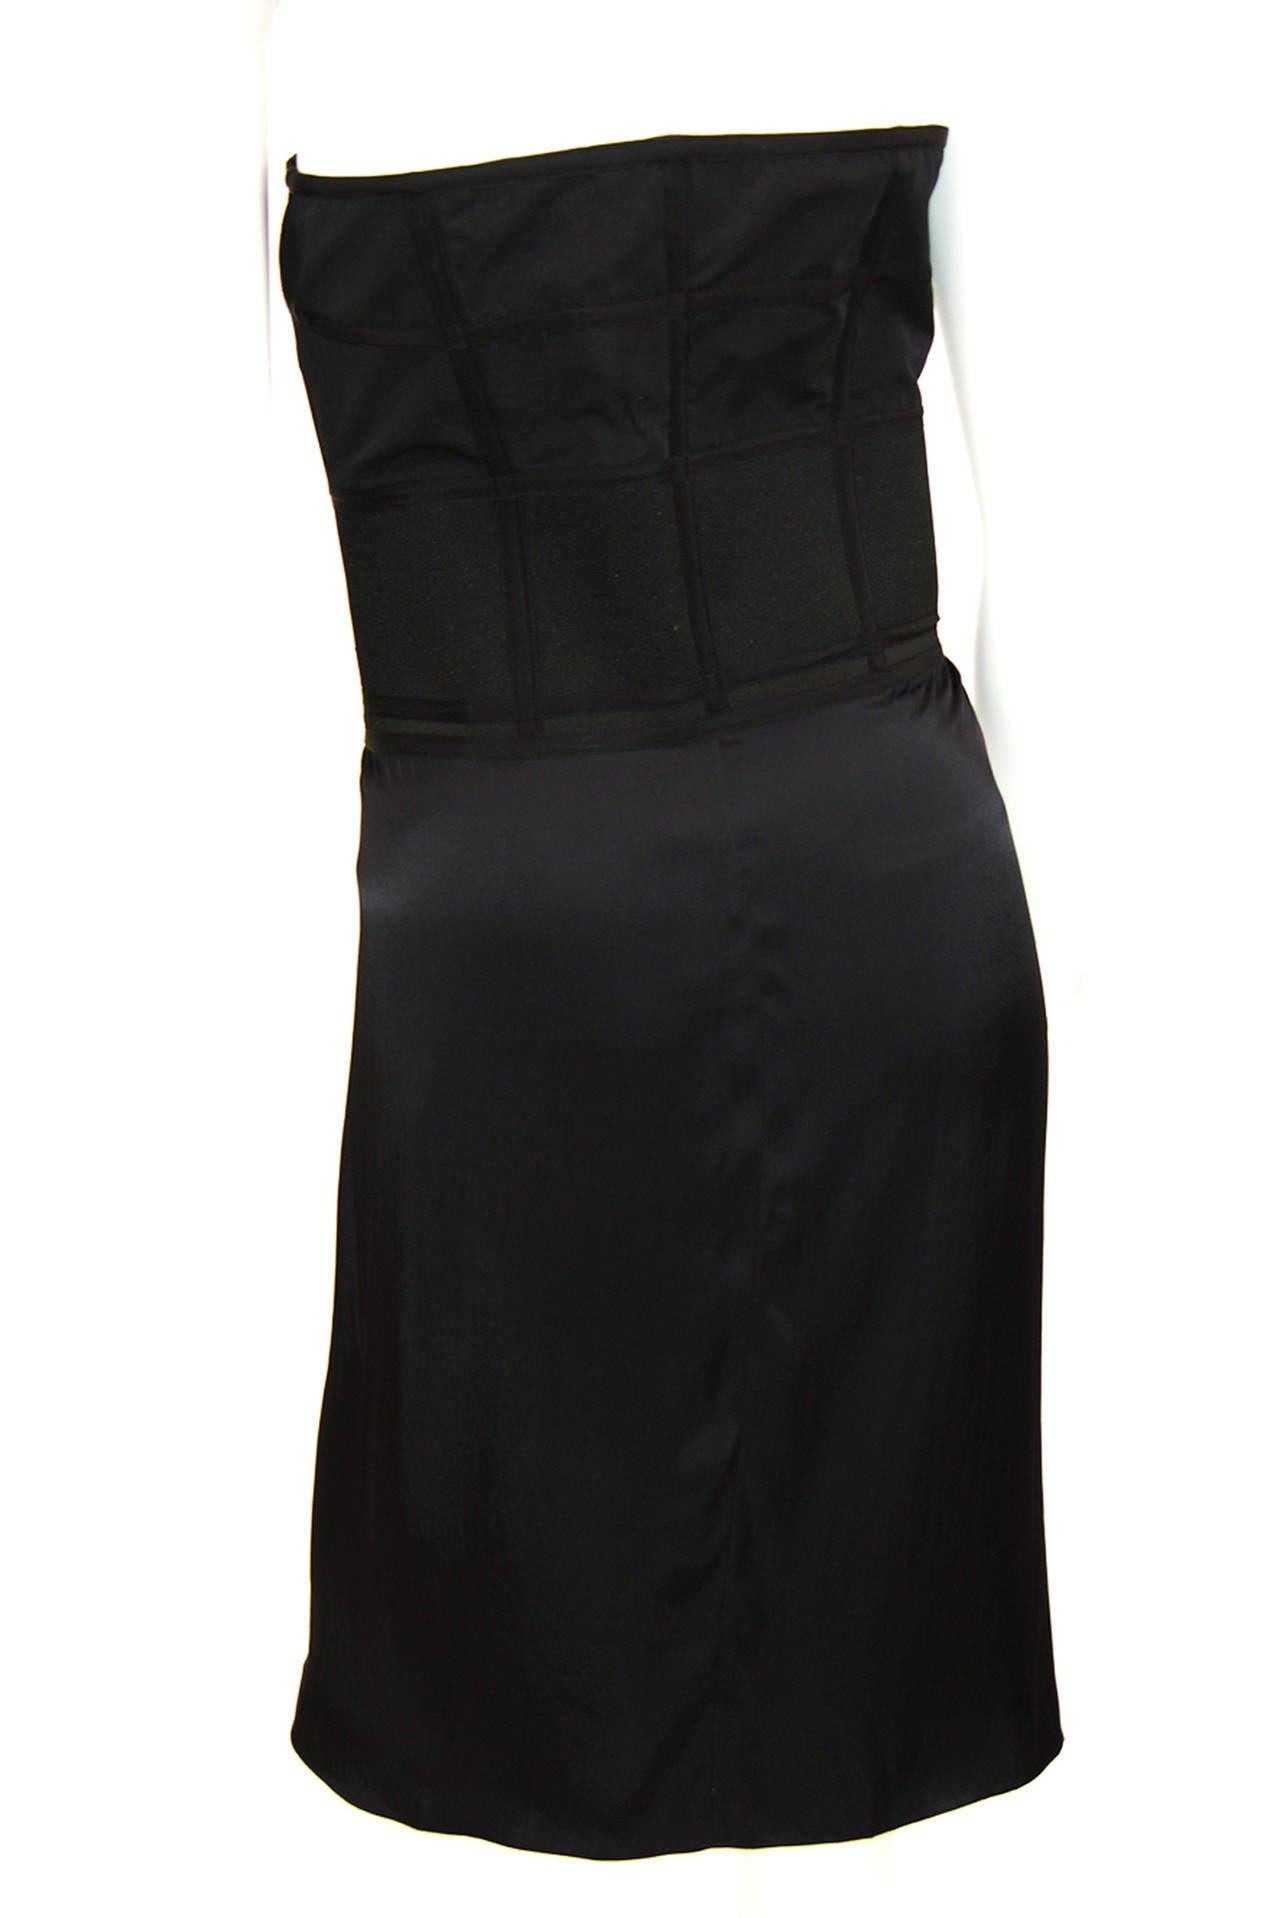 Black New BALENCIAGA CORSET BLACK DRESS